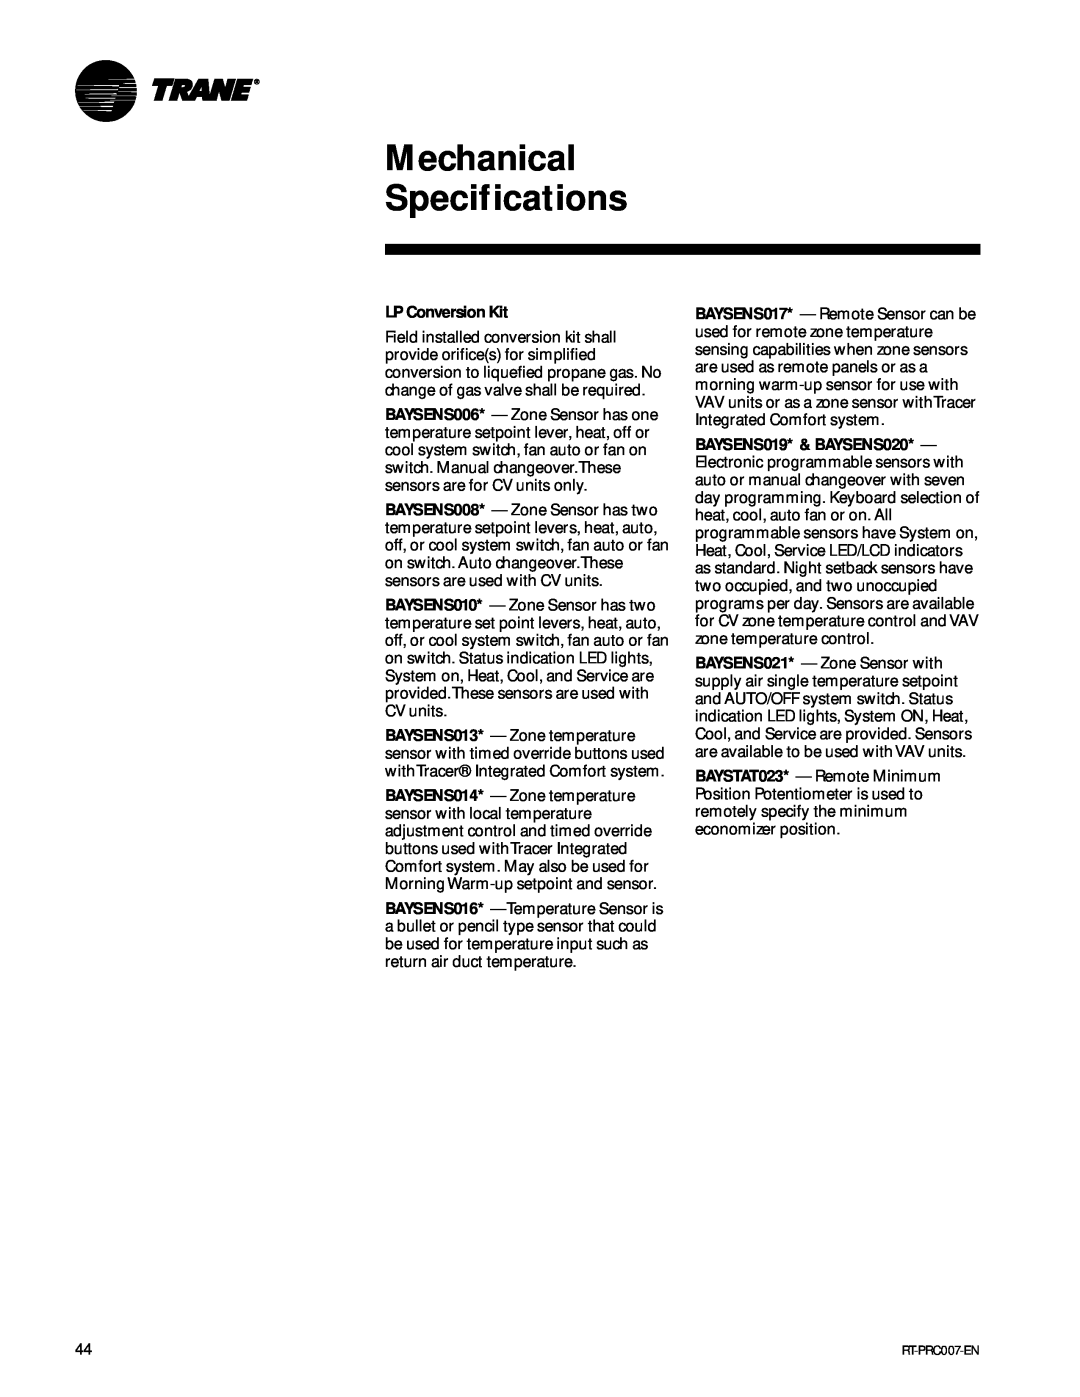 Trane RT-PRC007-EN manual Mechanical Specifications, LP Conversion Kit 